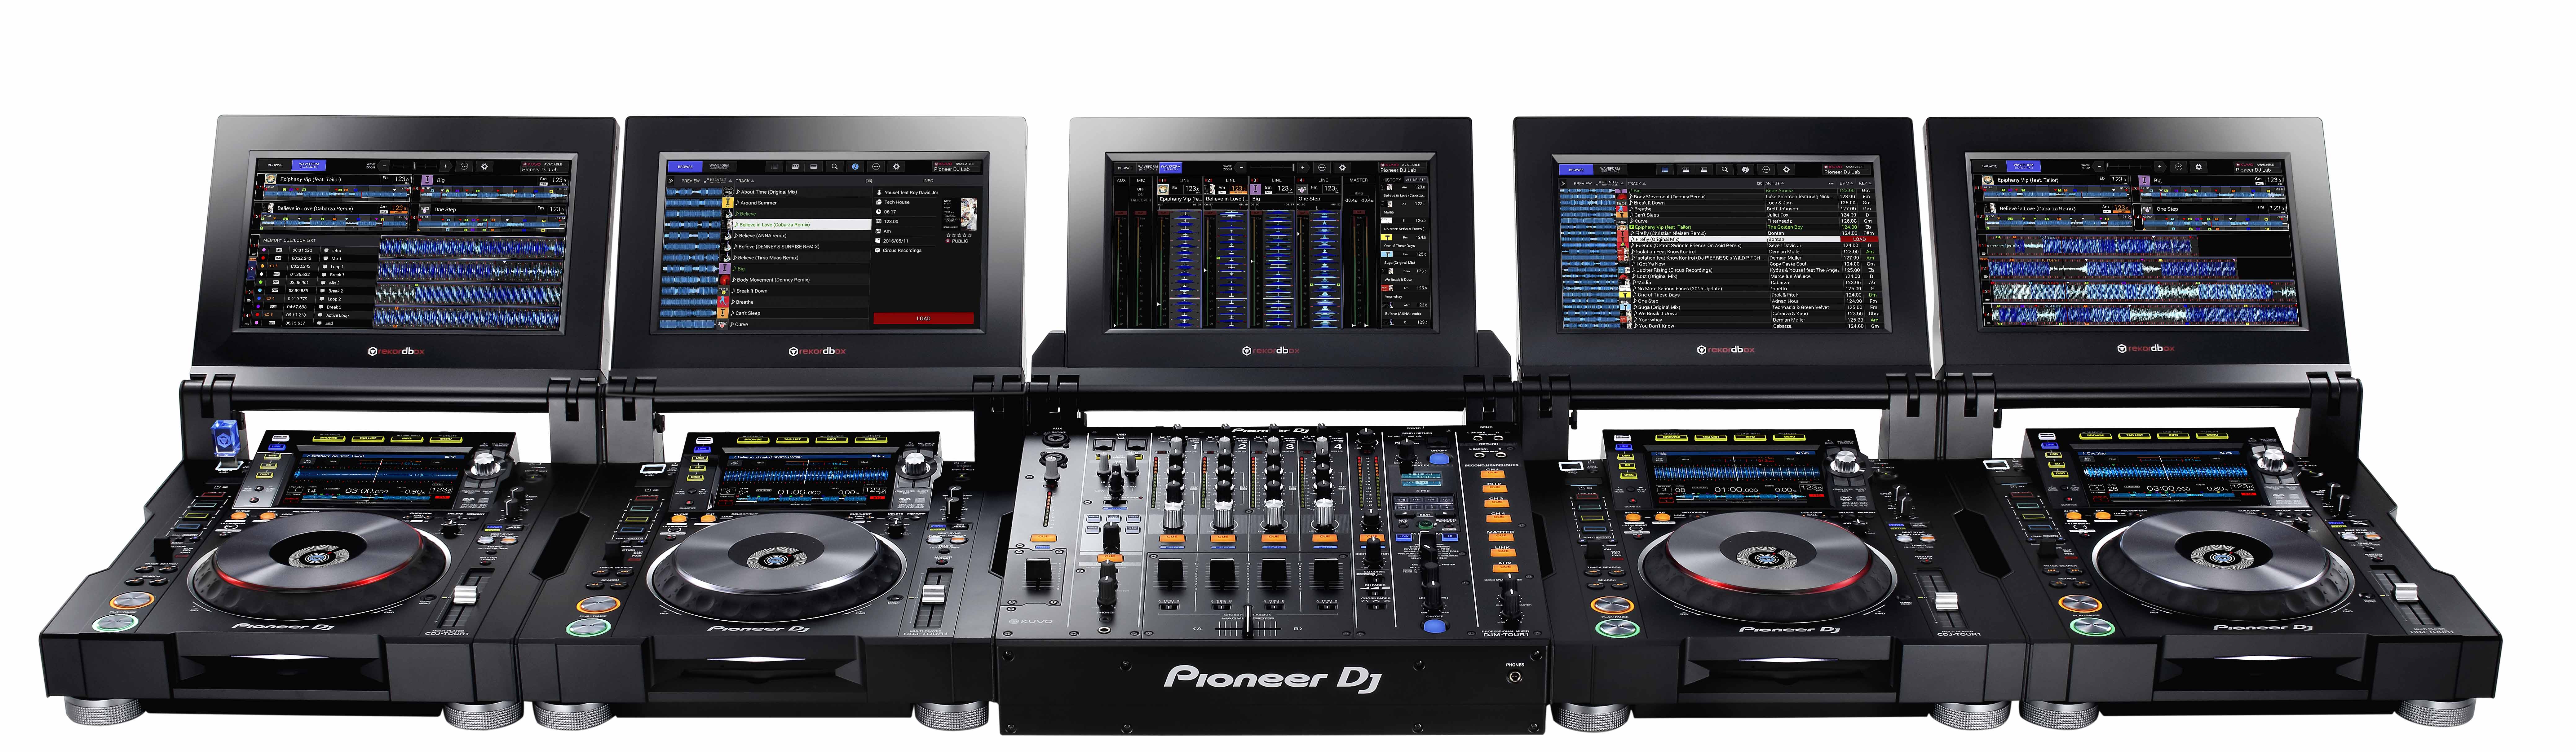 Pioneer CDJ-TOUR1 y Pioneer DJM-TOUR1, sistema TOUR diseñado para festivales